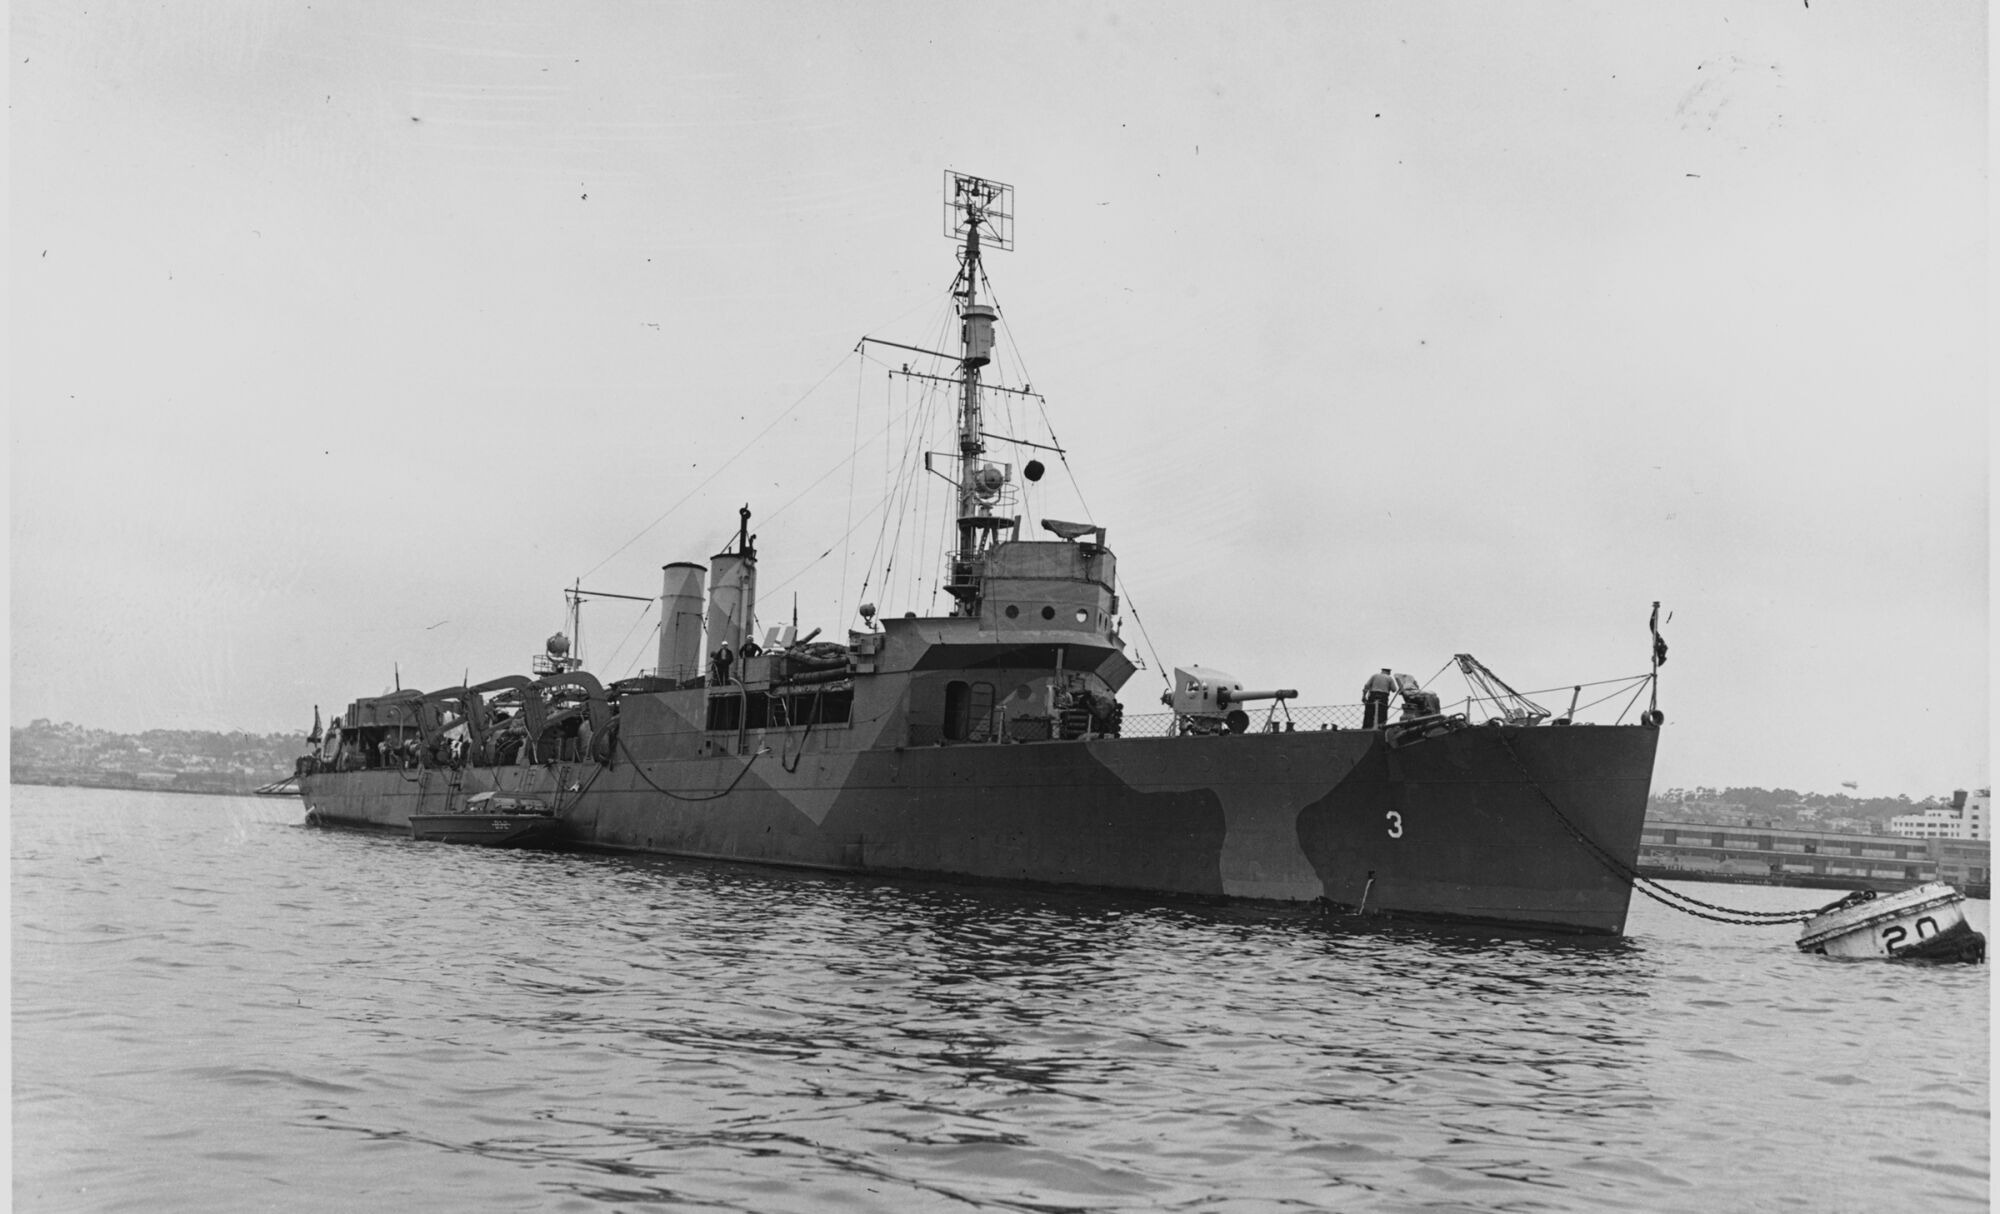 The destroyer-turned-transport U.S. Navy ship Gregory, photographed in port